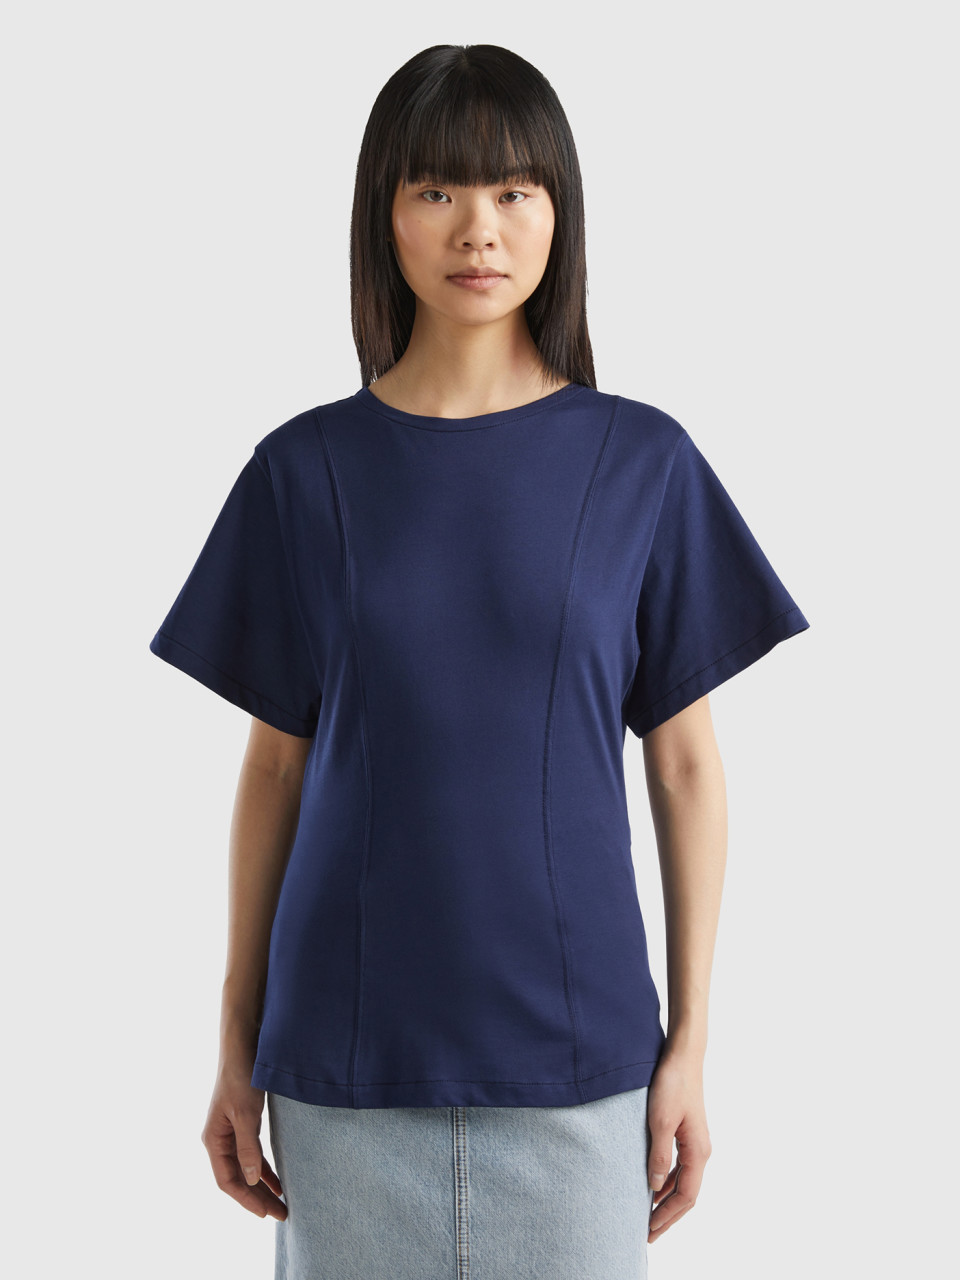 Benetton, Warmes Tailliertes T-shirt, Dunkelblau, female